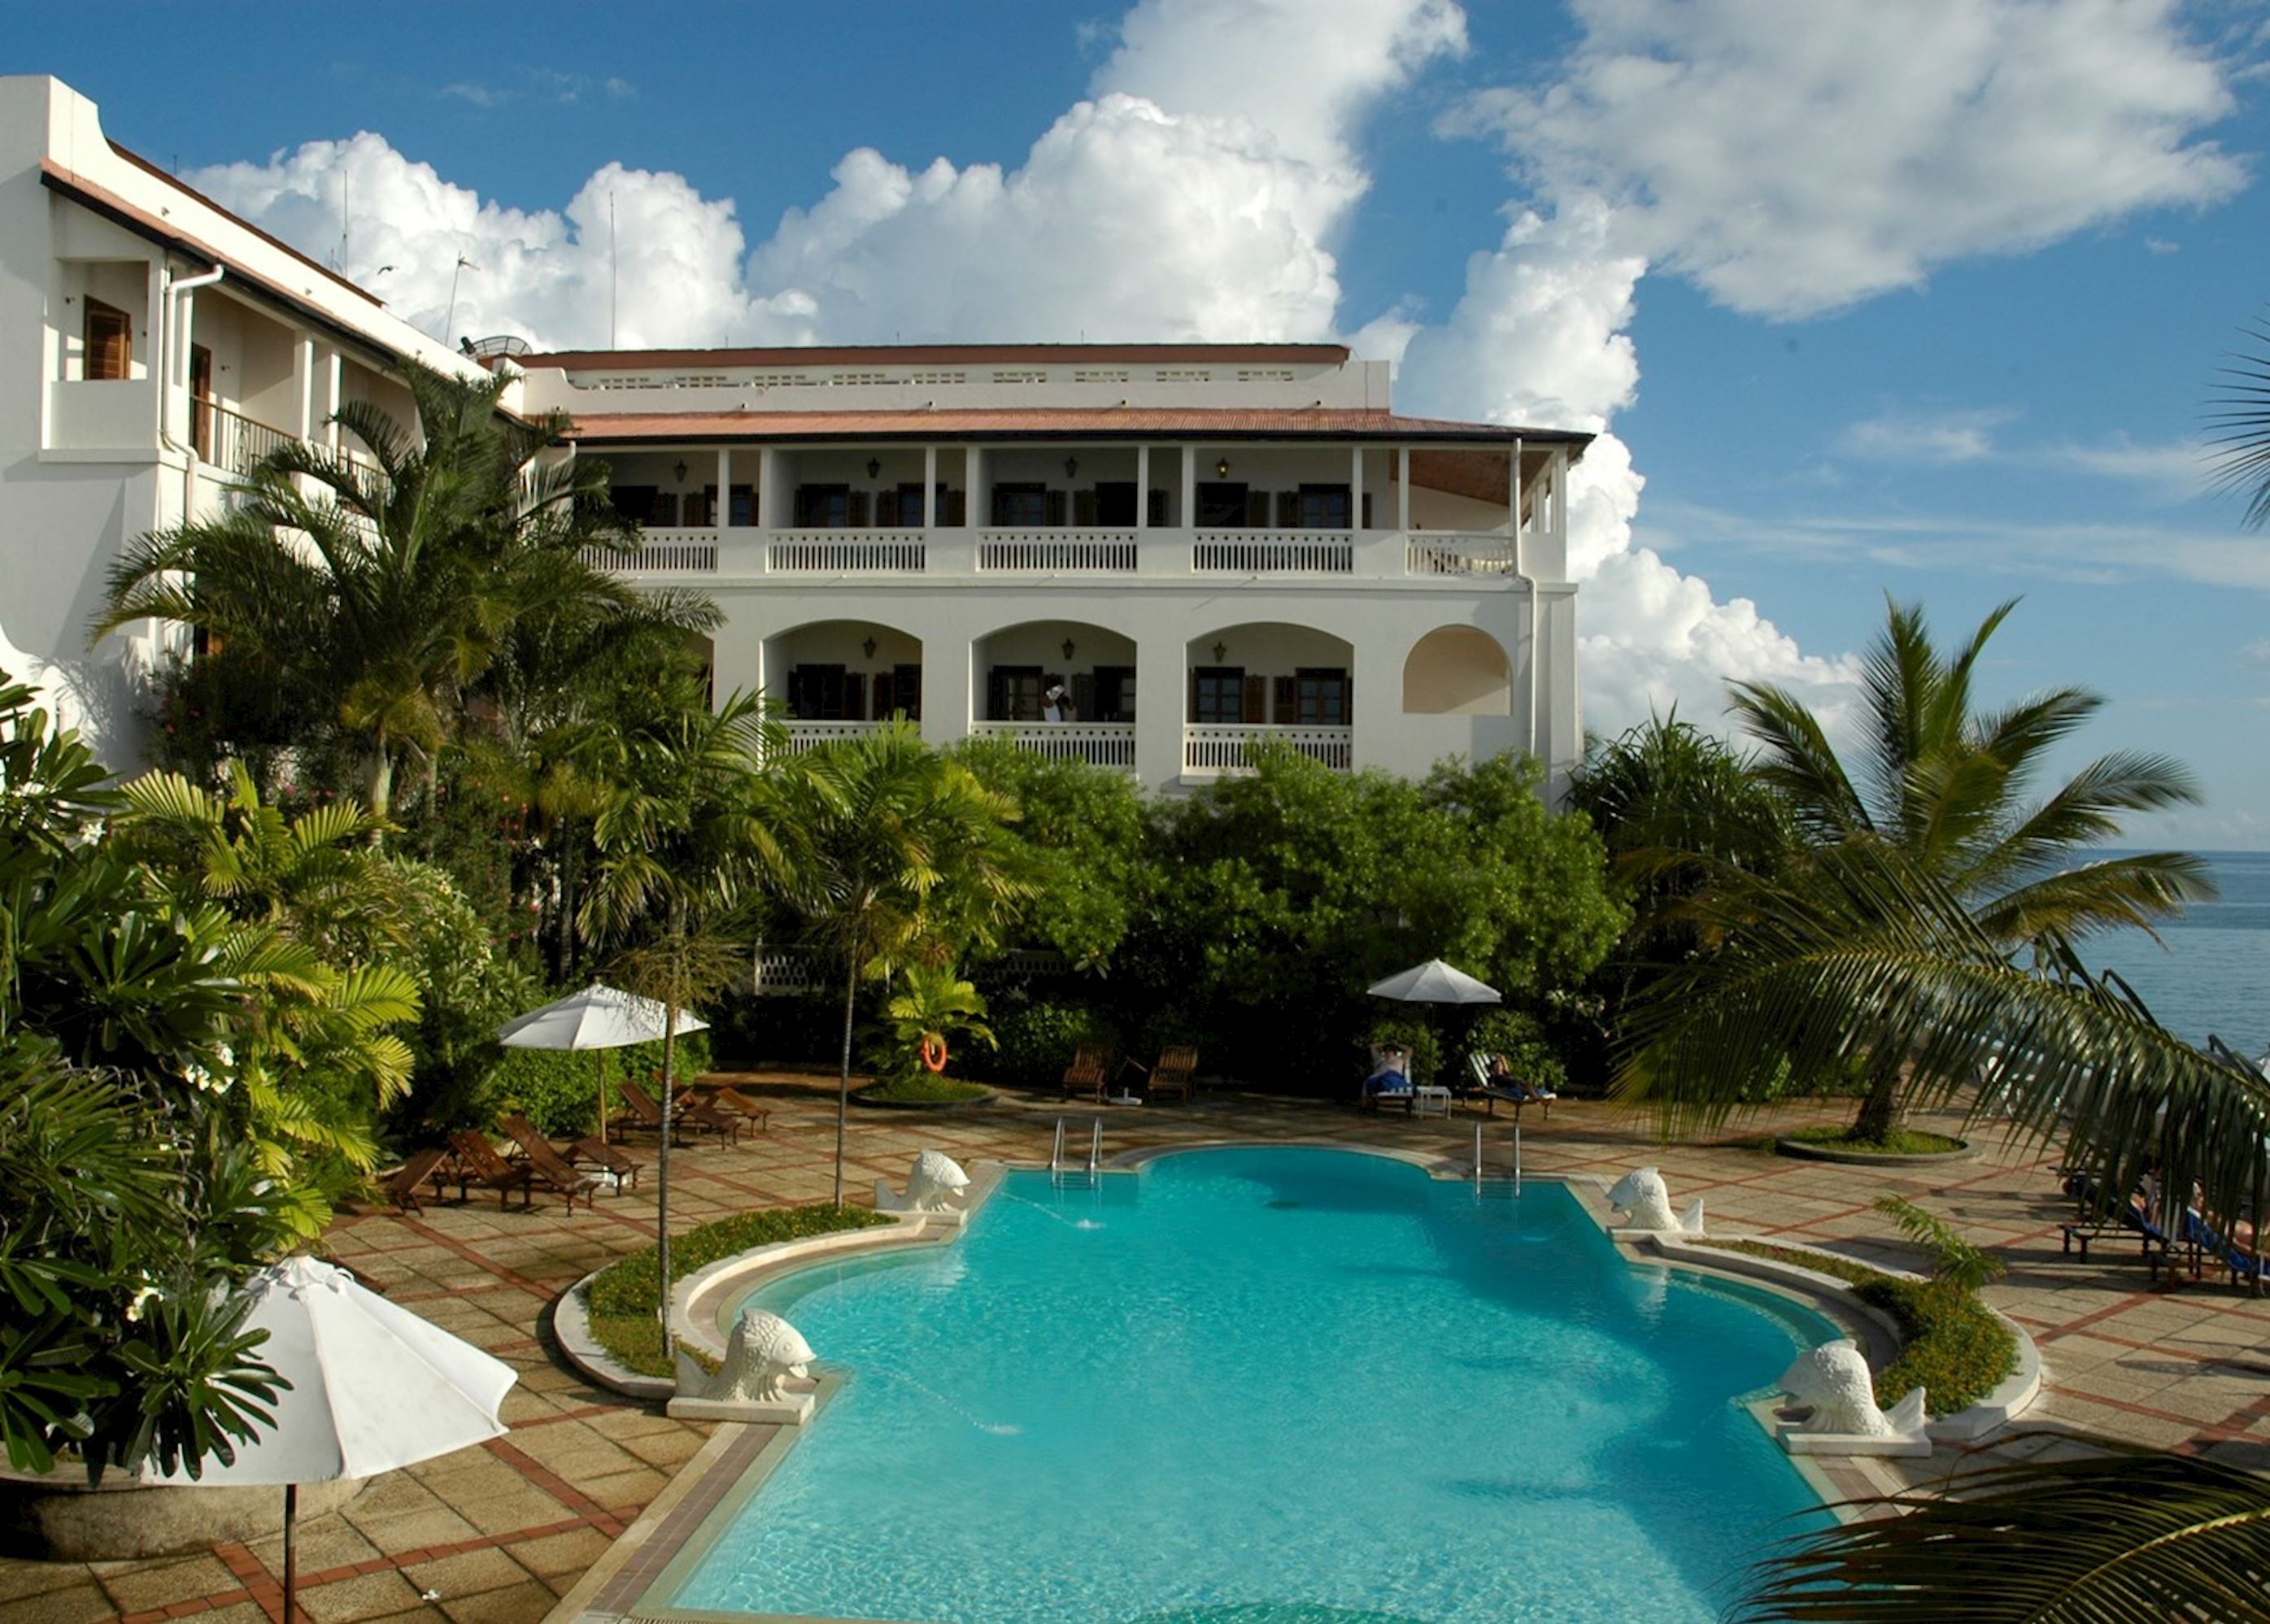 Overnight at Serena Hotel in Dar es Salaam